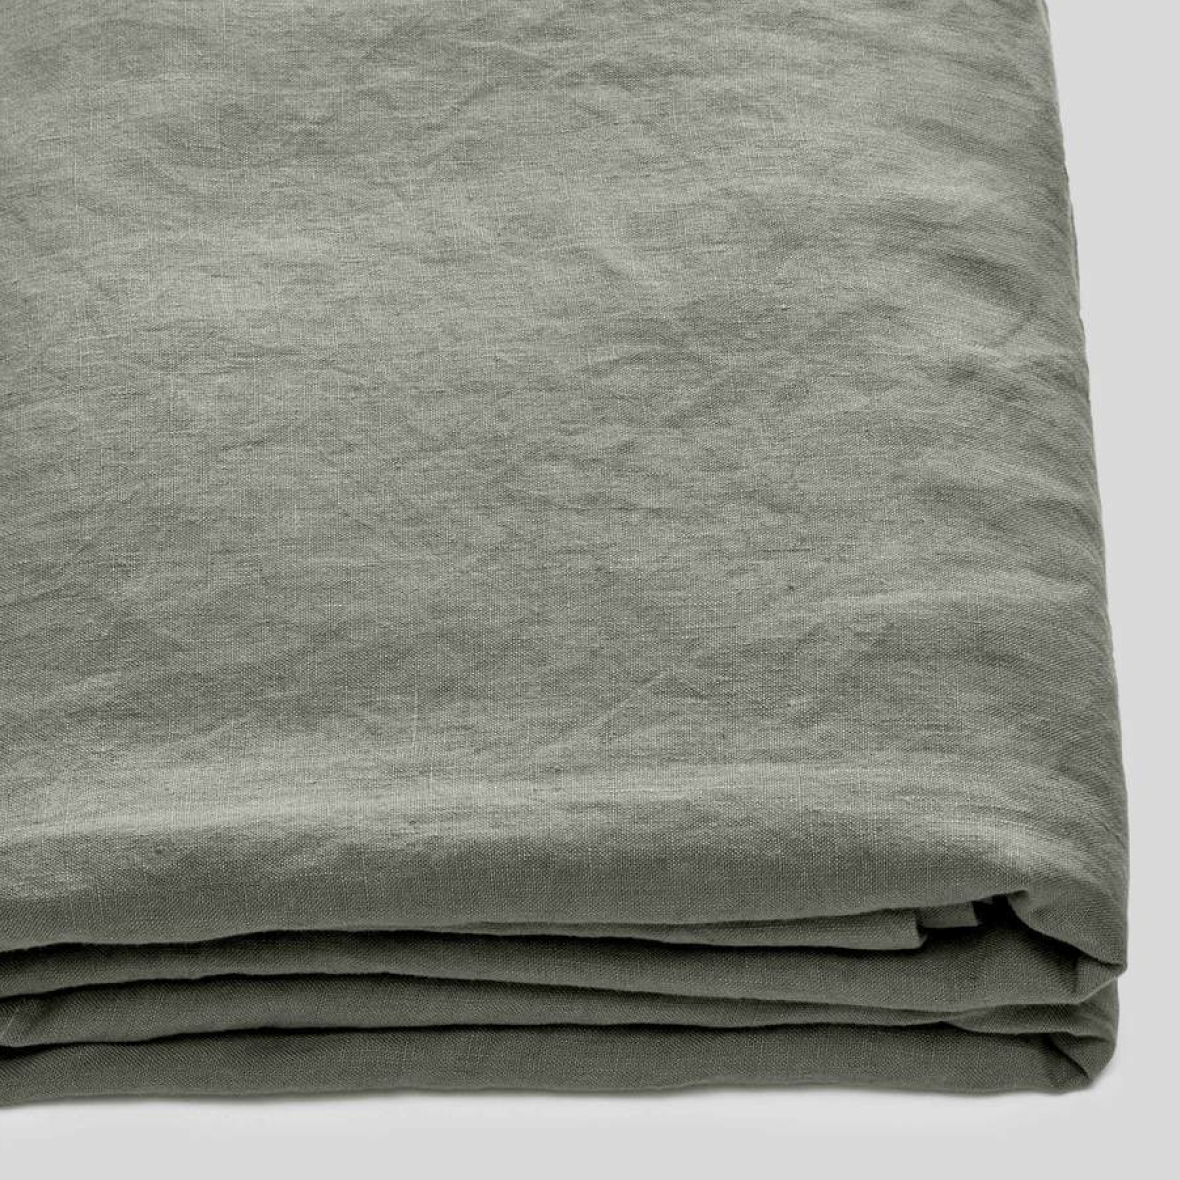 100% Linen Fitted Sheet in Khaki